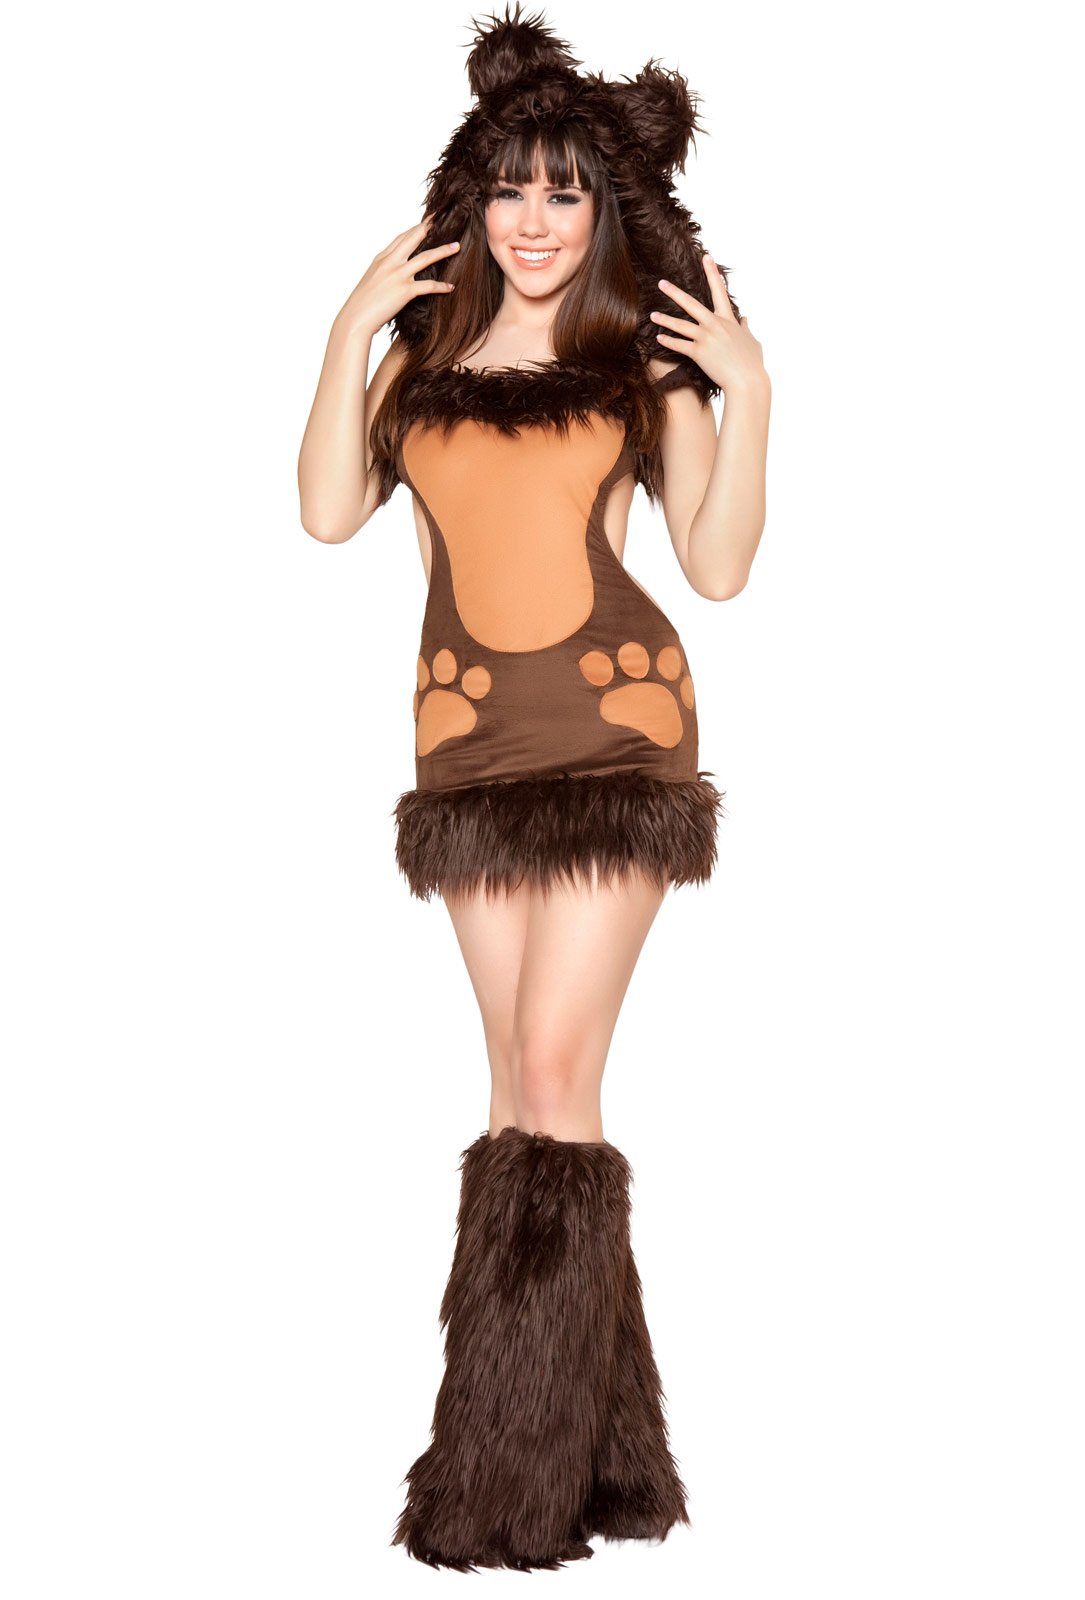 Bodacious Bear Adult Costume - Click Image to Close